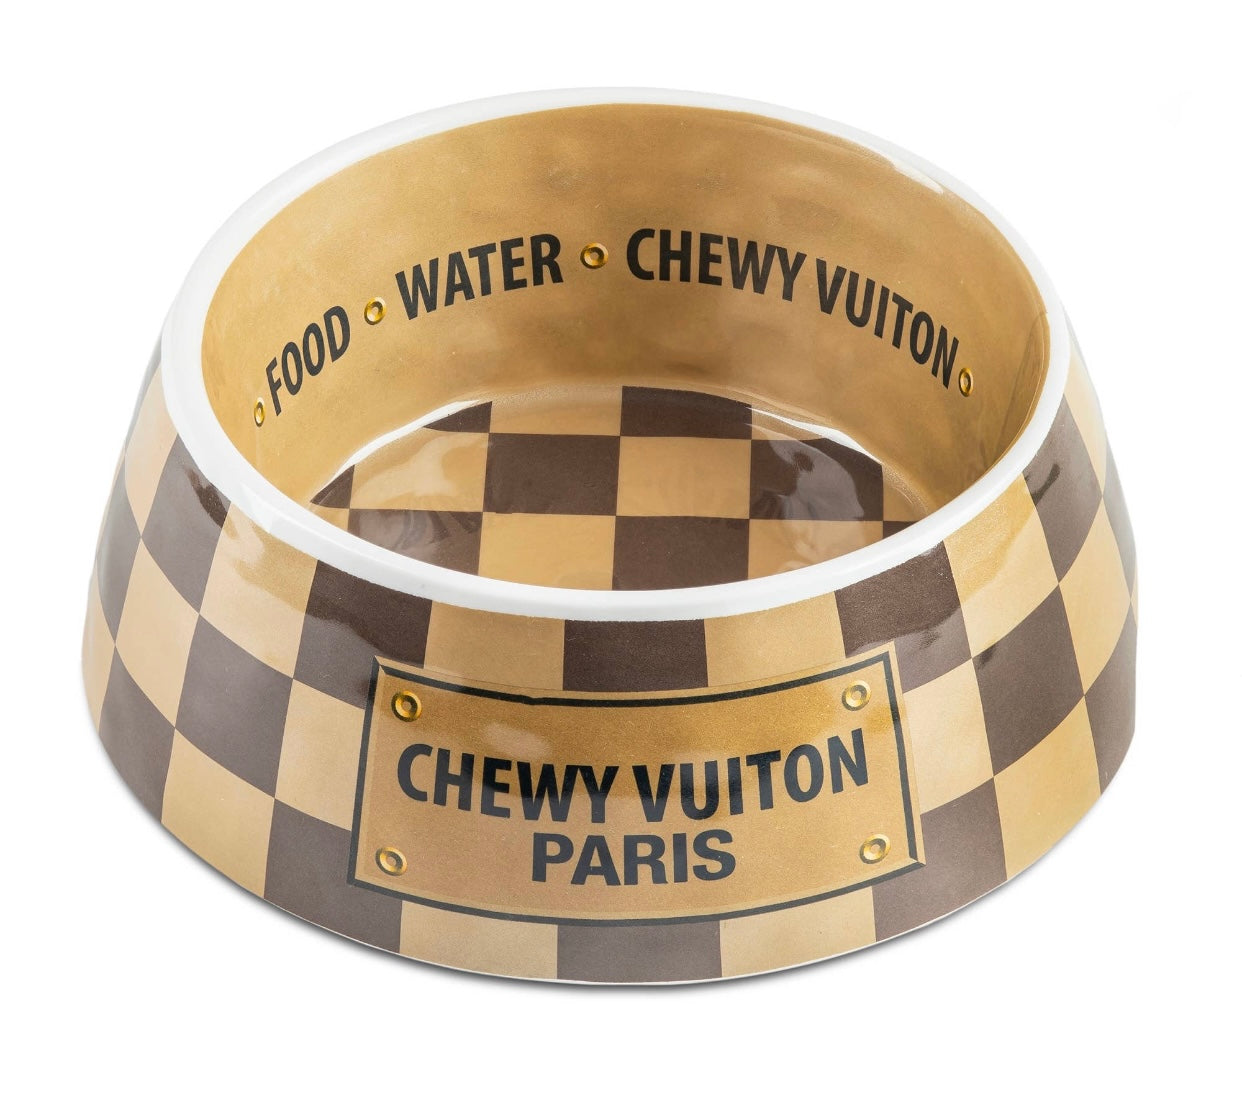 Medium Chewy Vuiton dog bowl